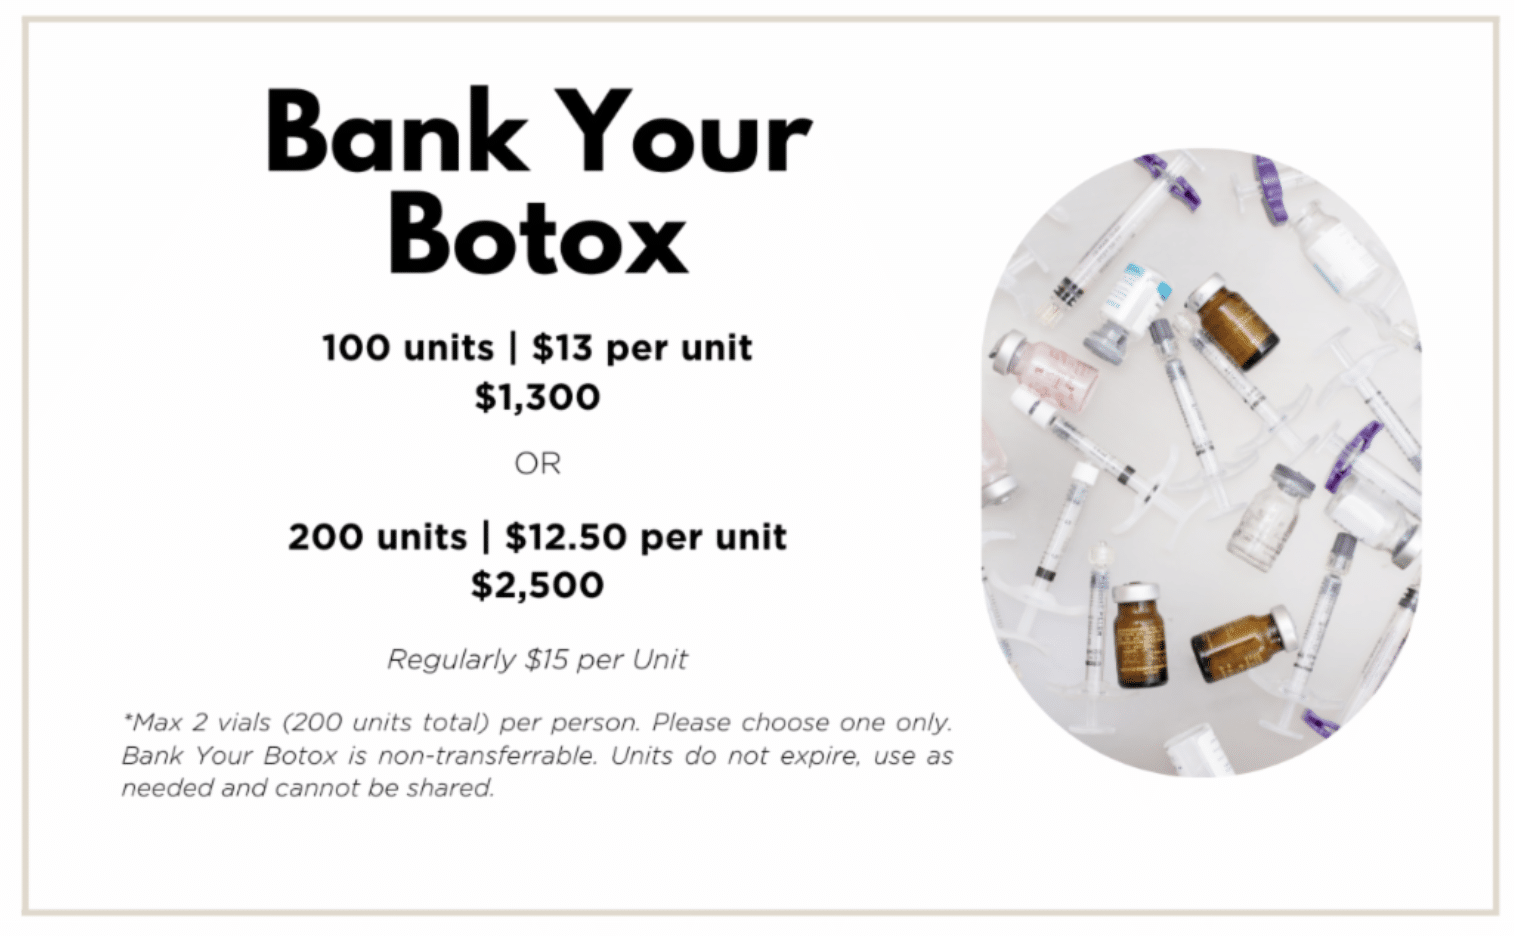 Bank your botox